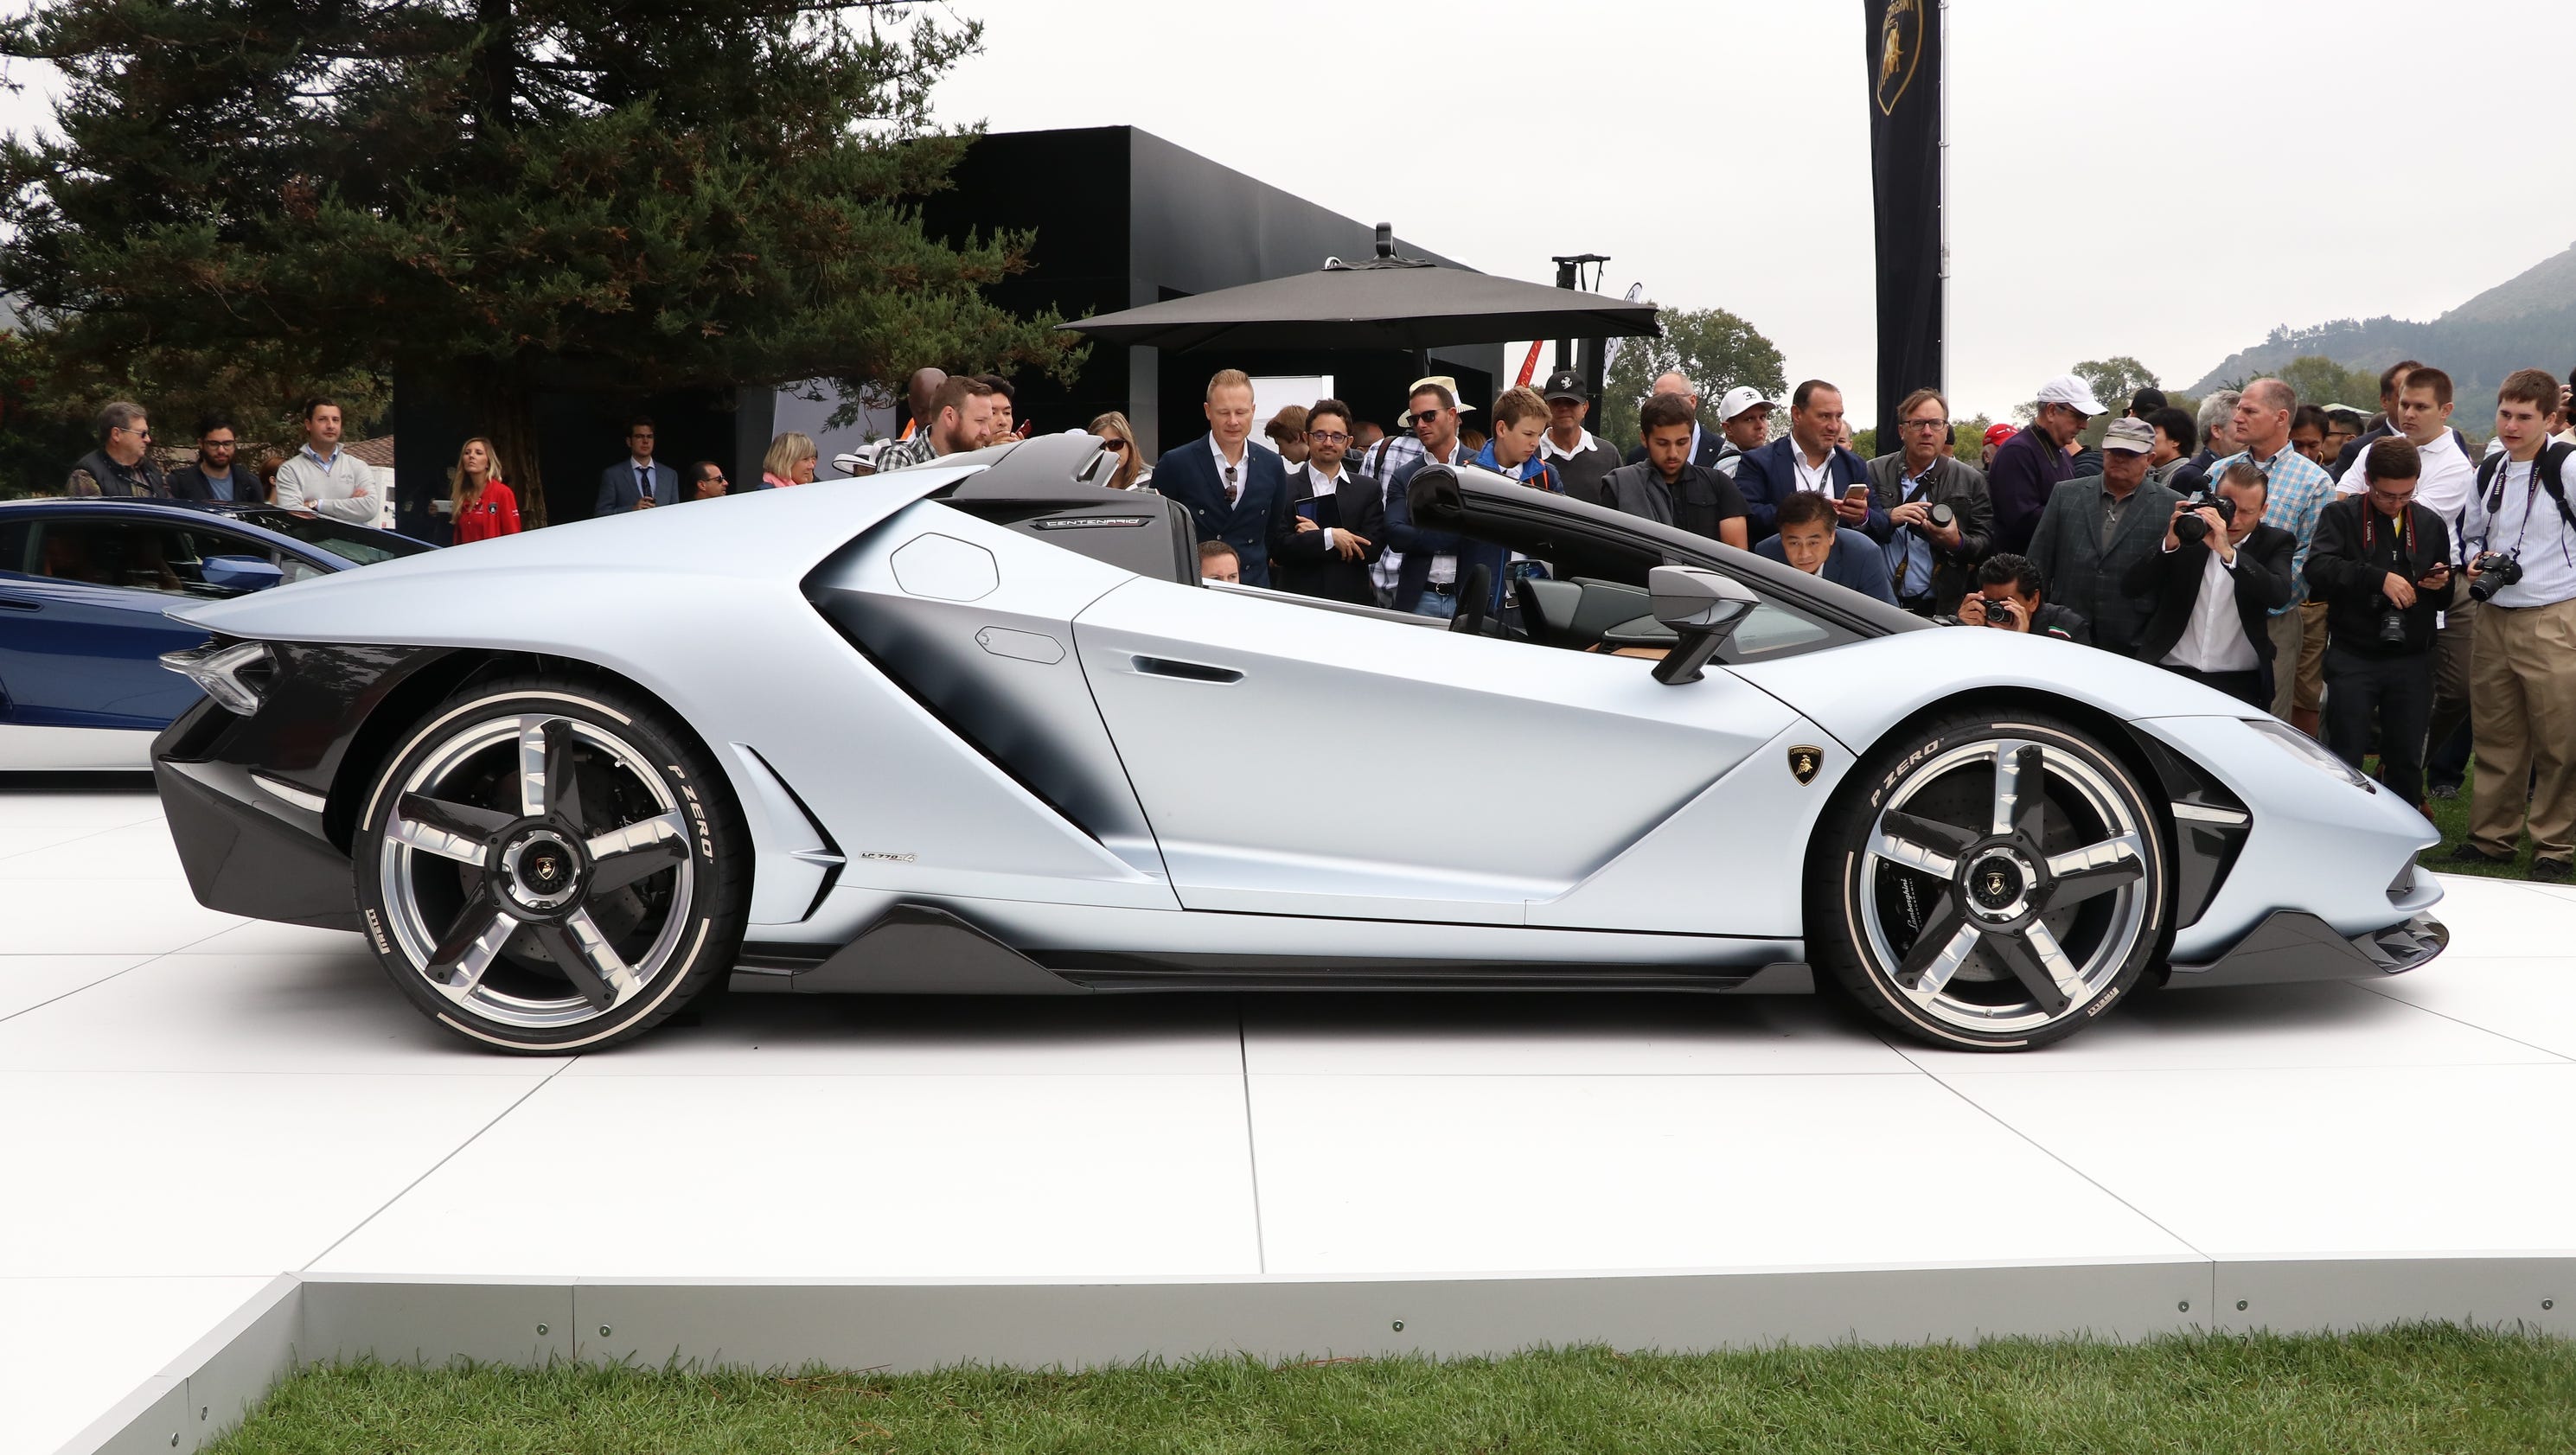 Lamborghini shows off its new Centenario supercar